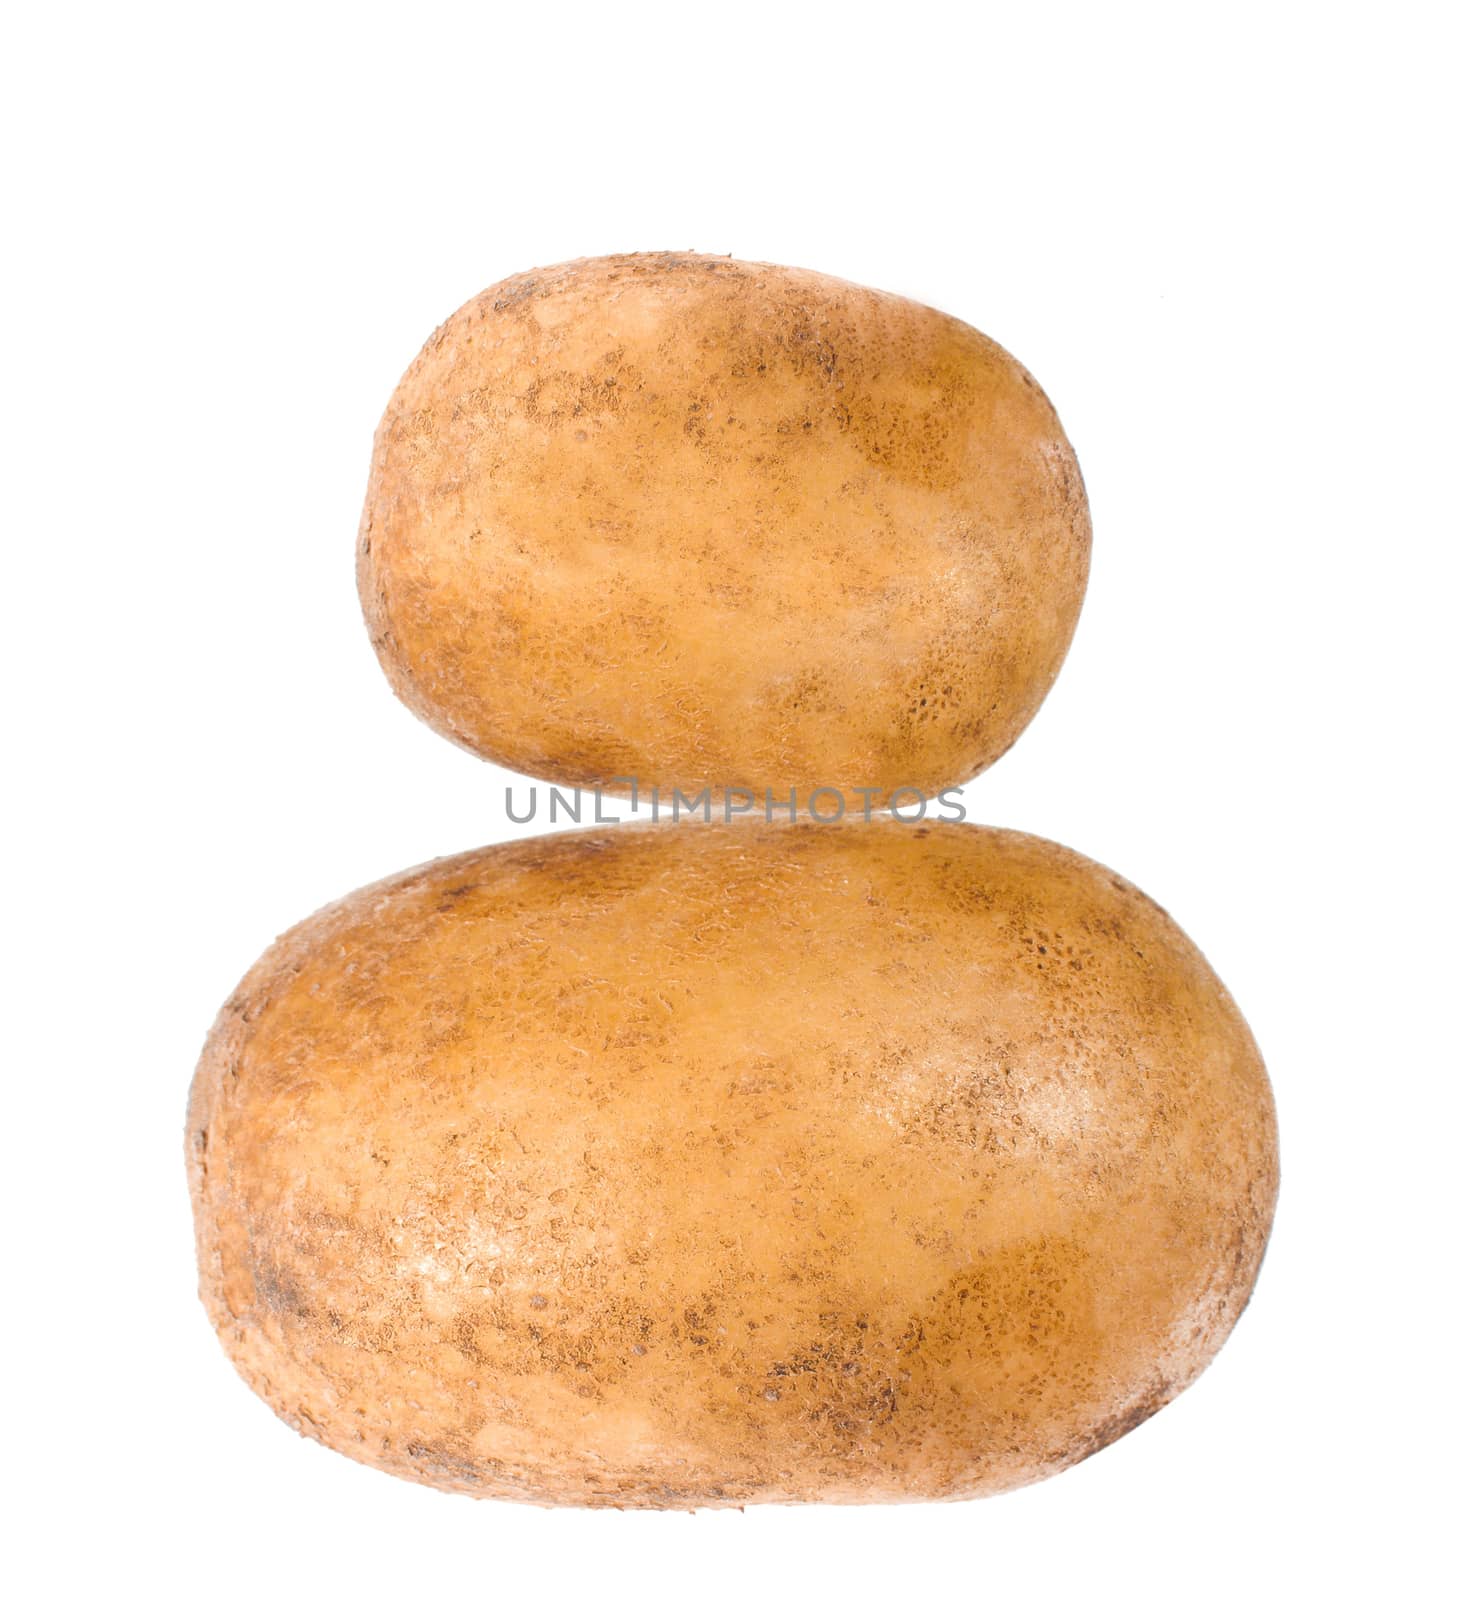 potato isolated by ozaiachin